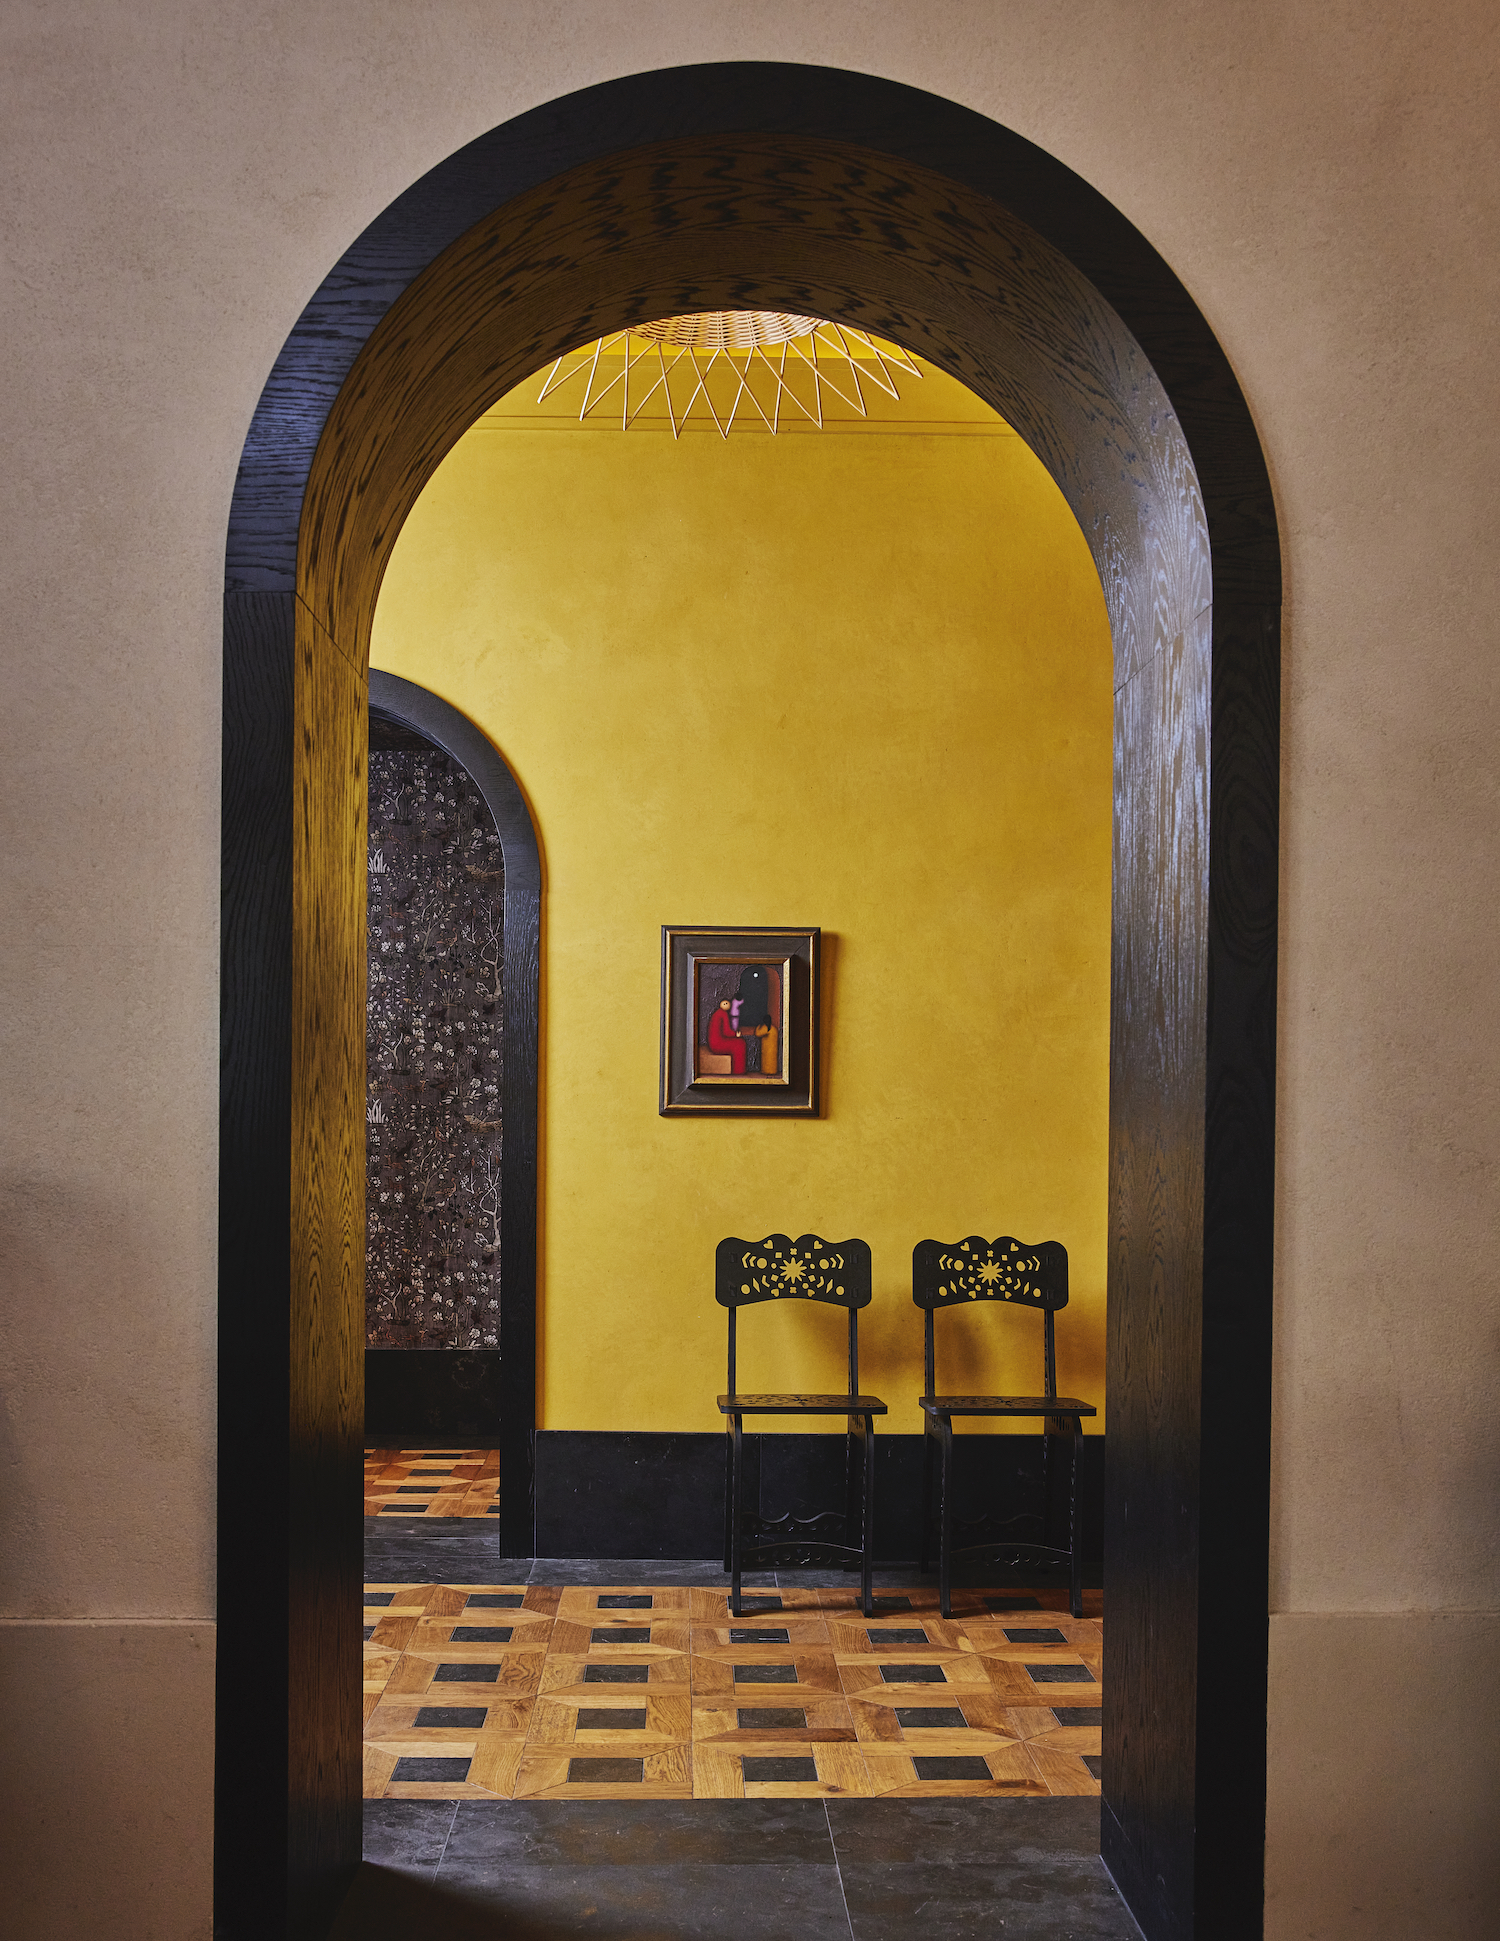 Hotel hallway designed by Kelly Wearstler with Spanish influences